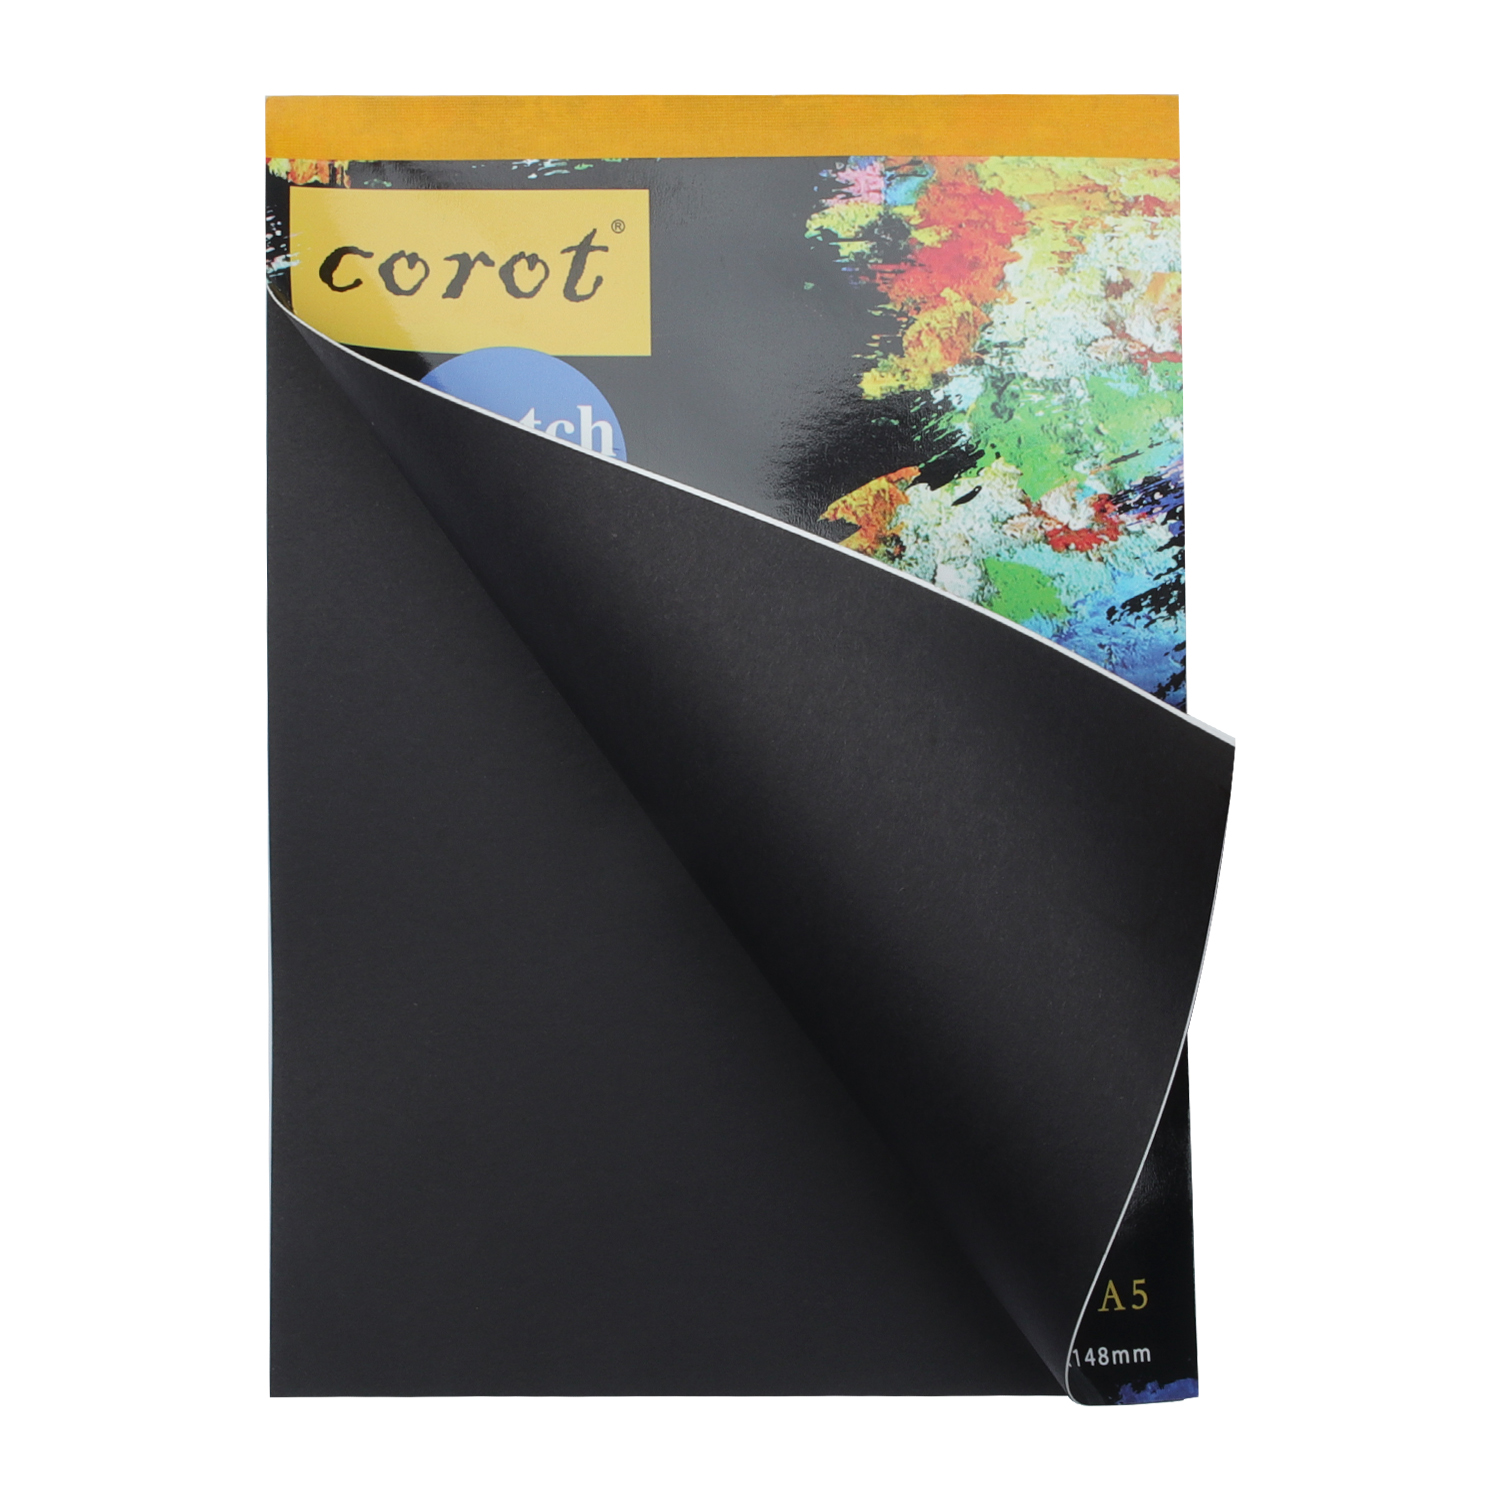 A4/A5 Paper Vintage Black Cardboard Premium Sketch Pad Drawing Book Paper 140GSM/25 fogli per pastello/matita e carbone1